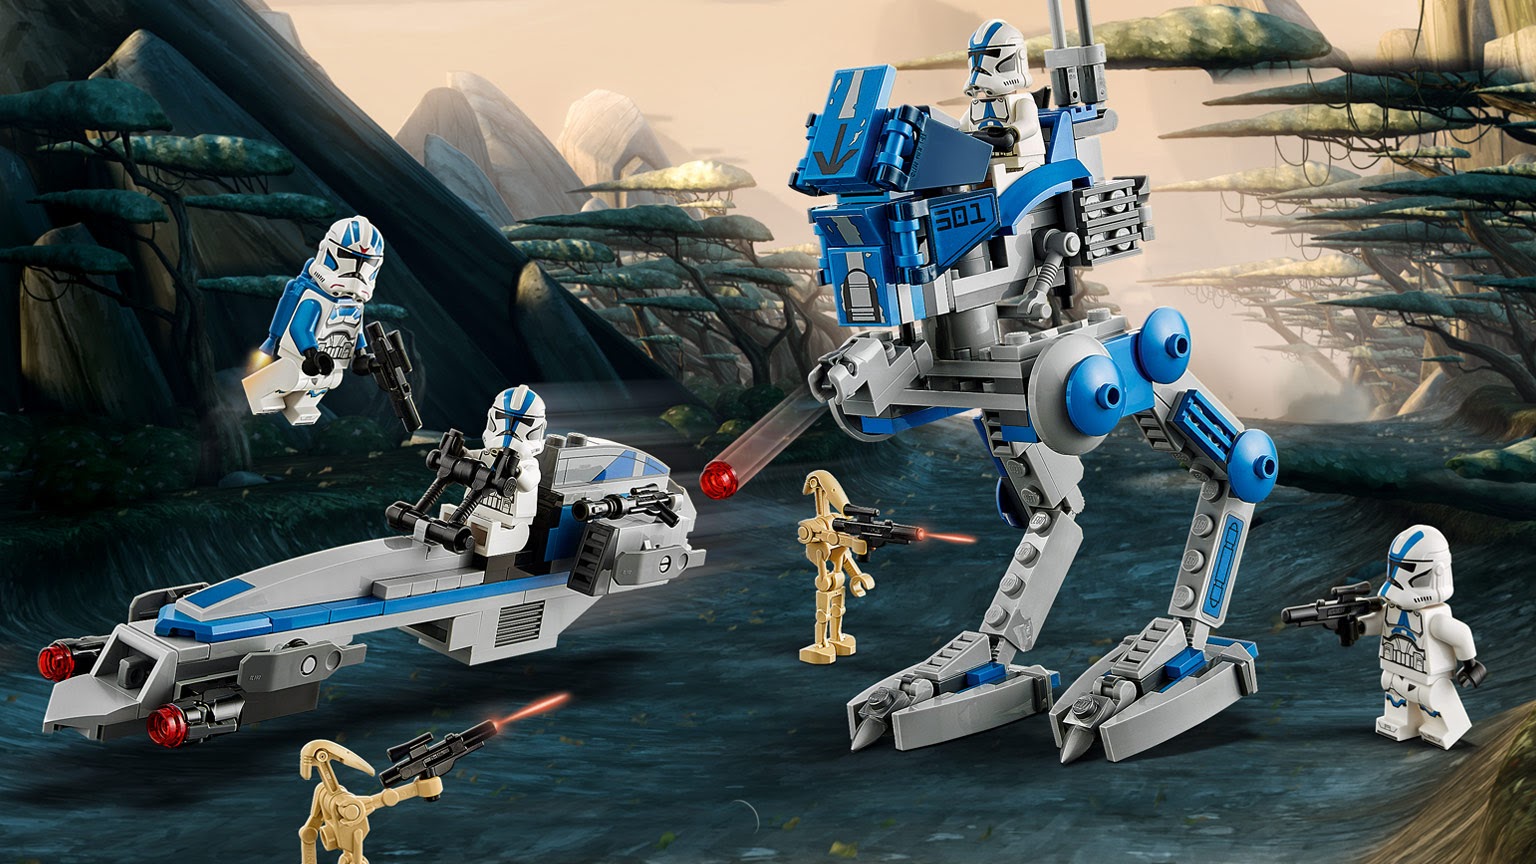 Lego ® set 75280 Disney Star Wars 501st legión Clone Troopers